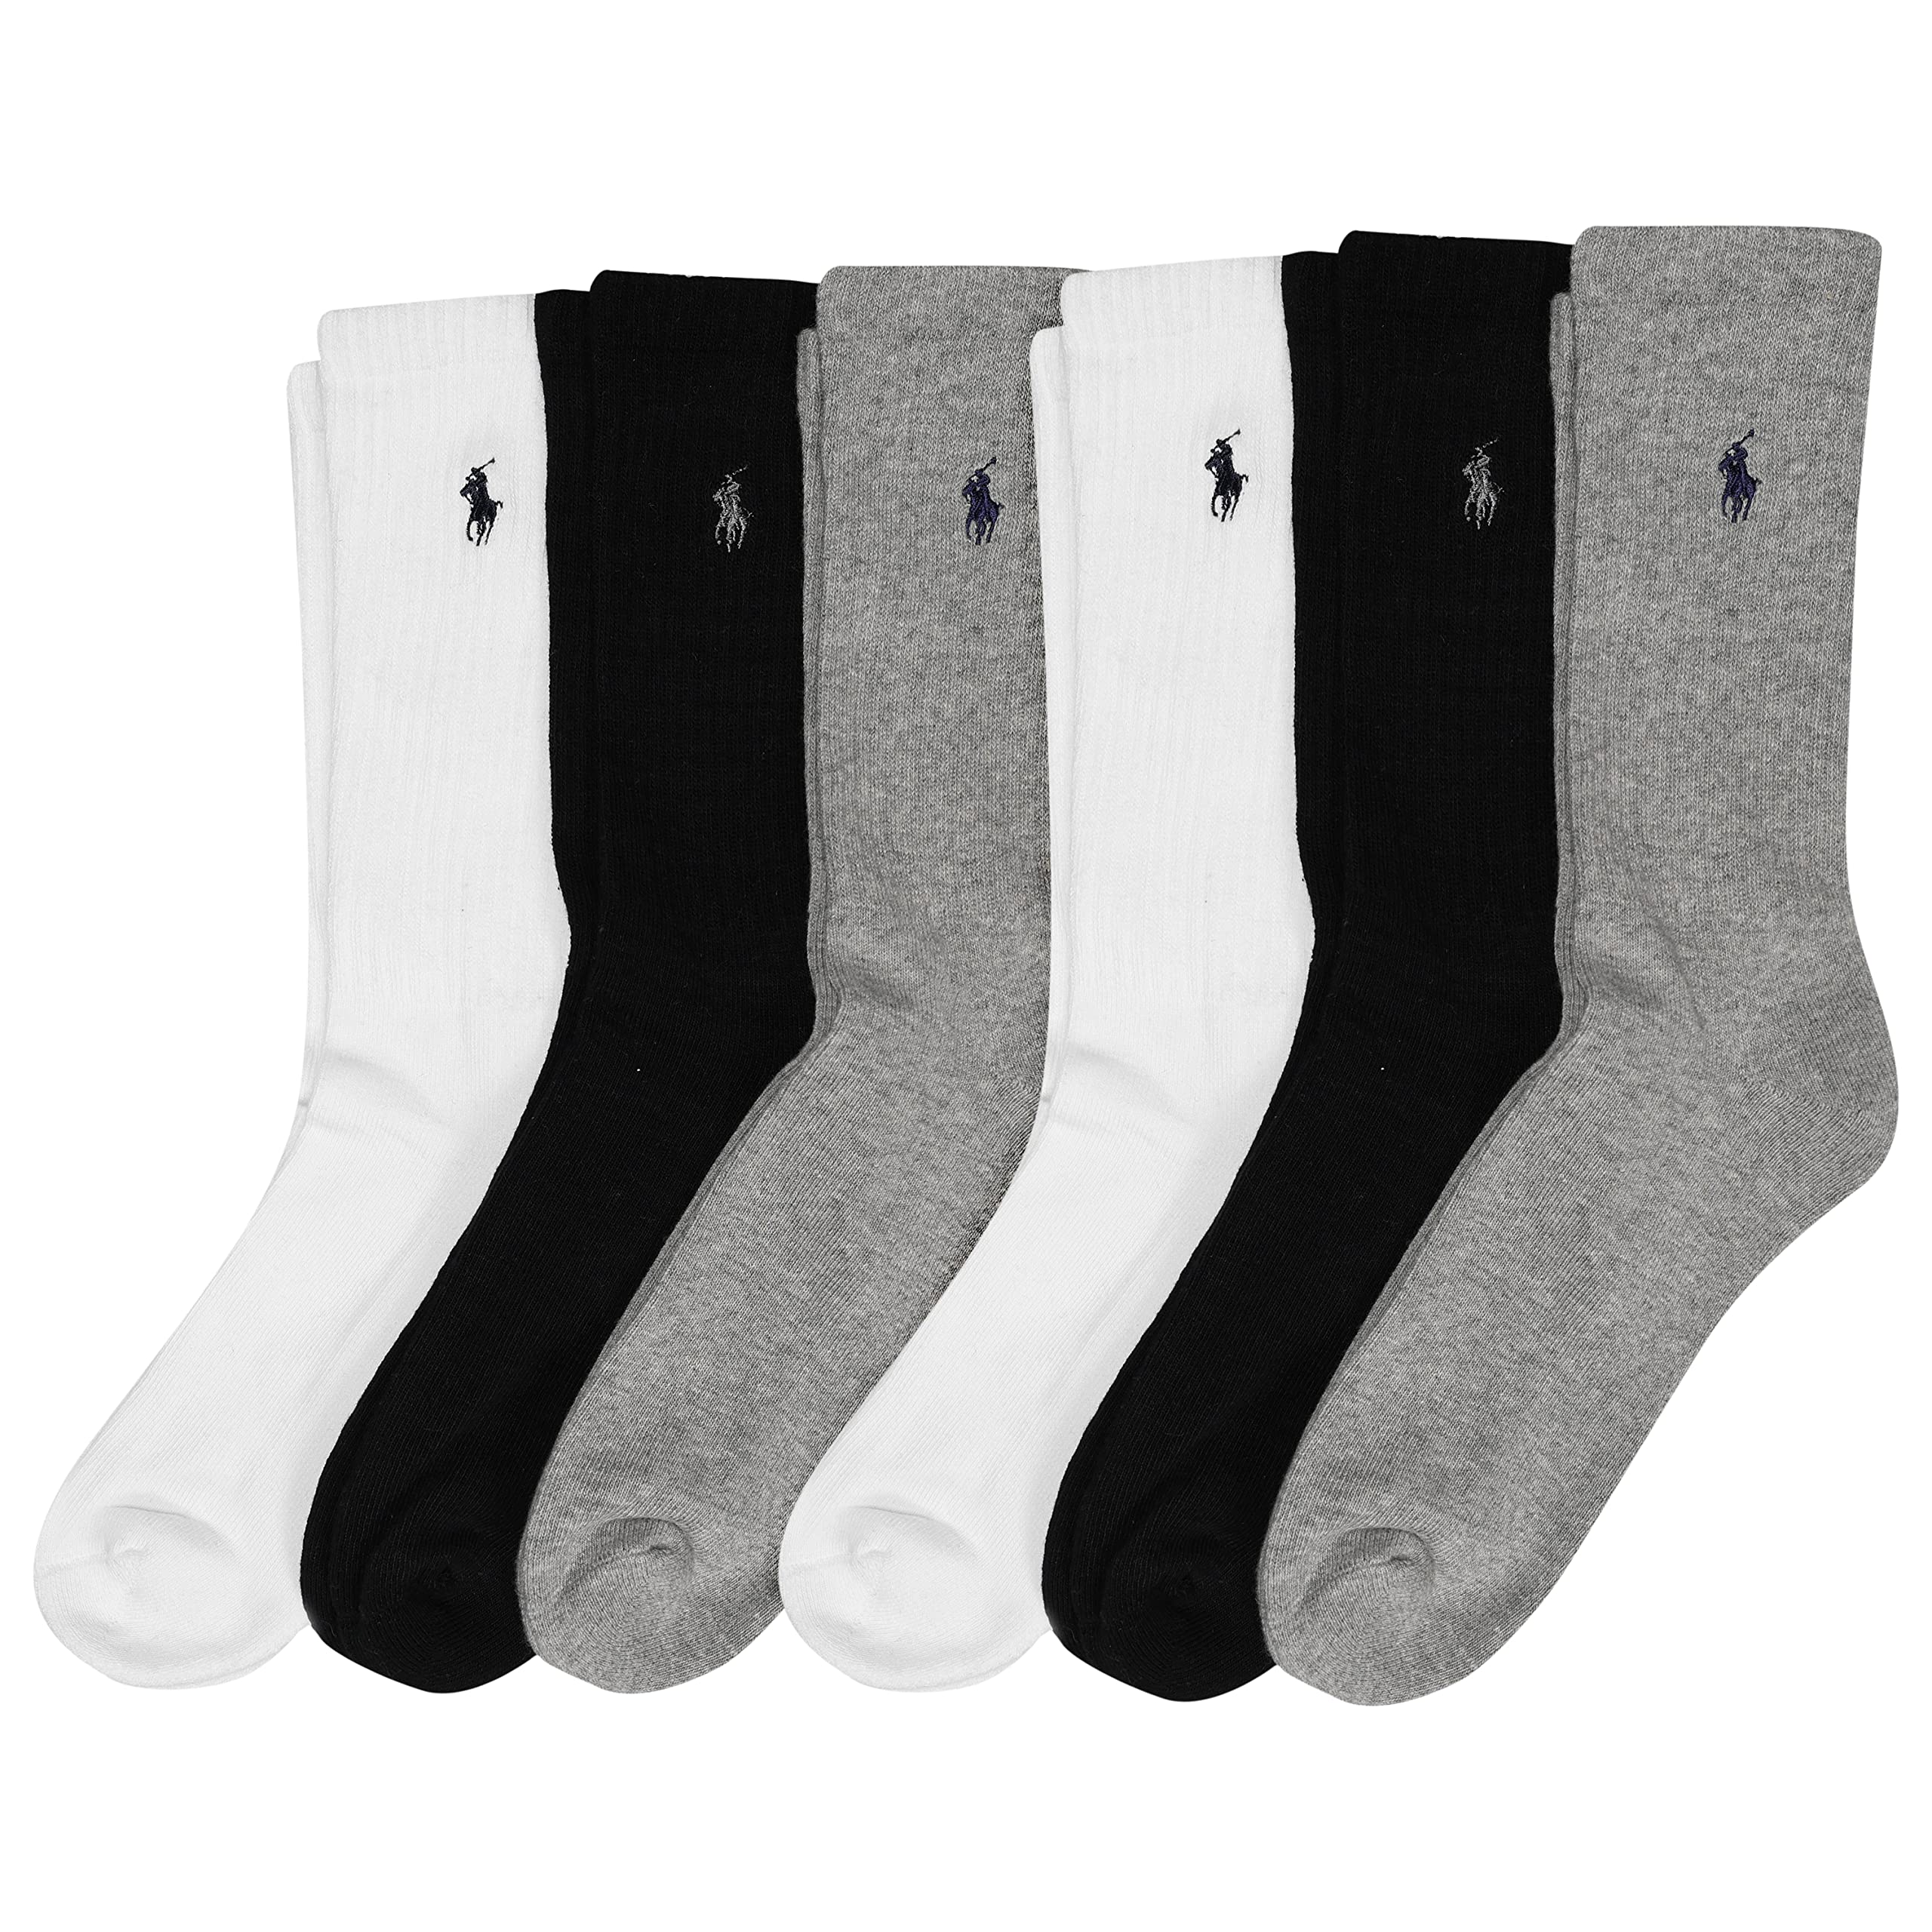 Mua POLO RALPH LAUREN Men's Classic Sport Solid Crew Socks - 6 Pair Pack -  Athletic Cushioned Cotton Comfort trên Amazon Mỹ chính hãng 2023 |  Giaonhan247